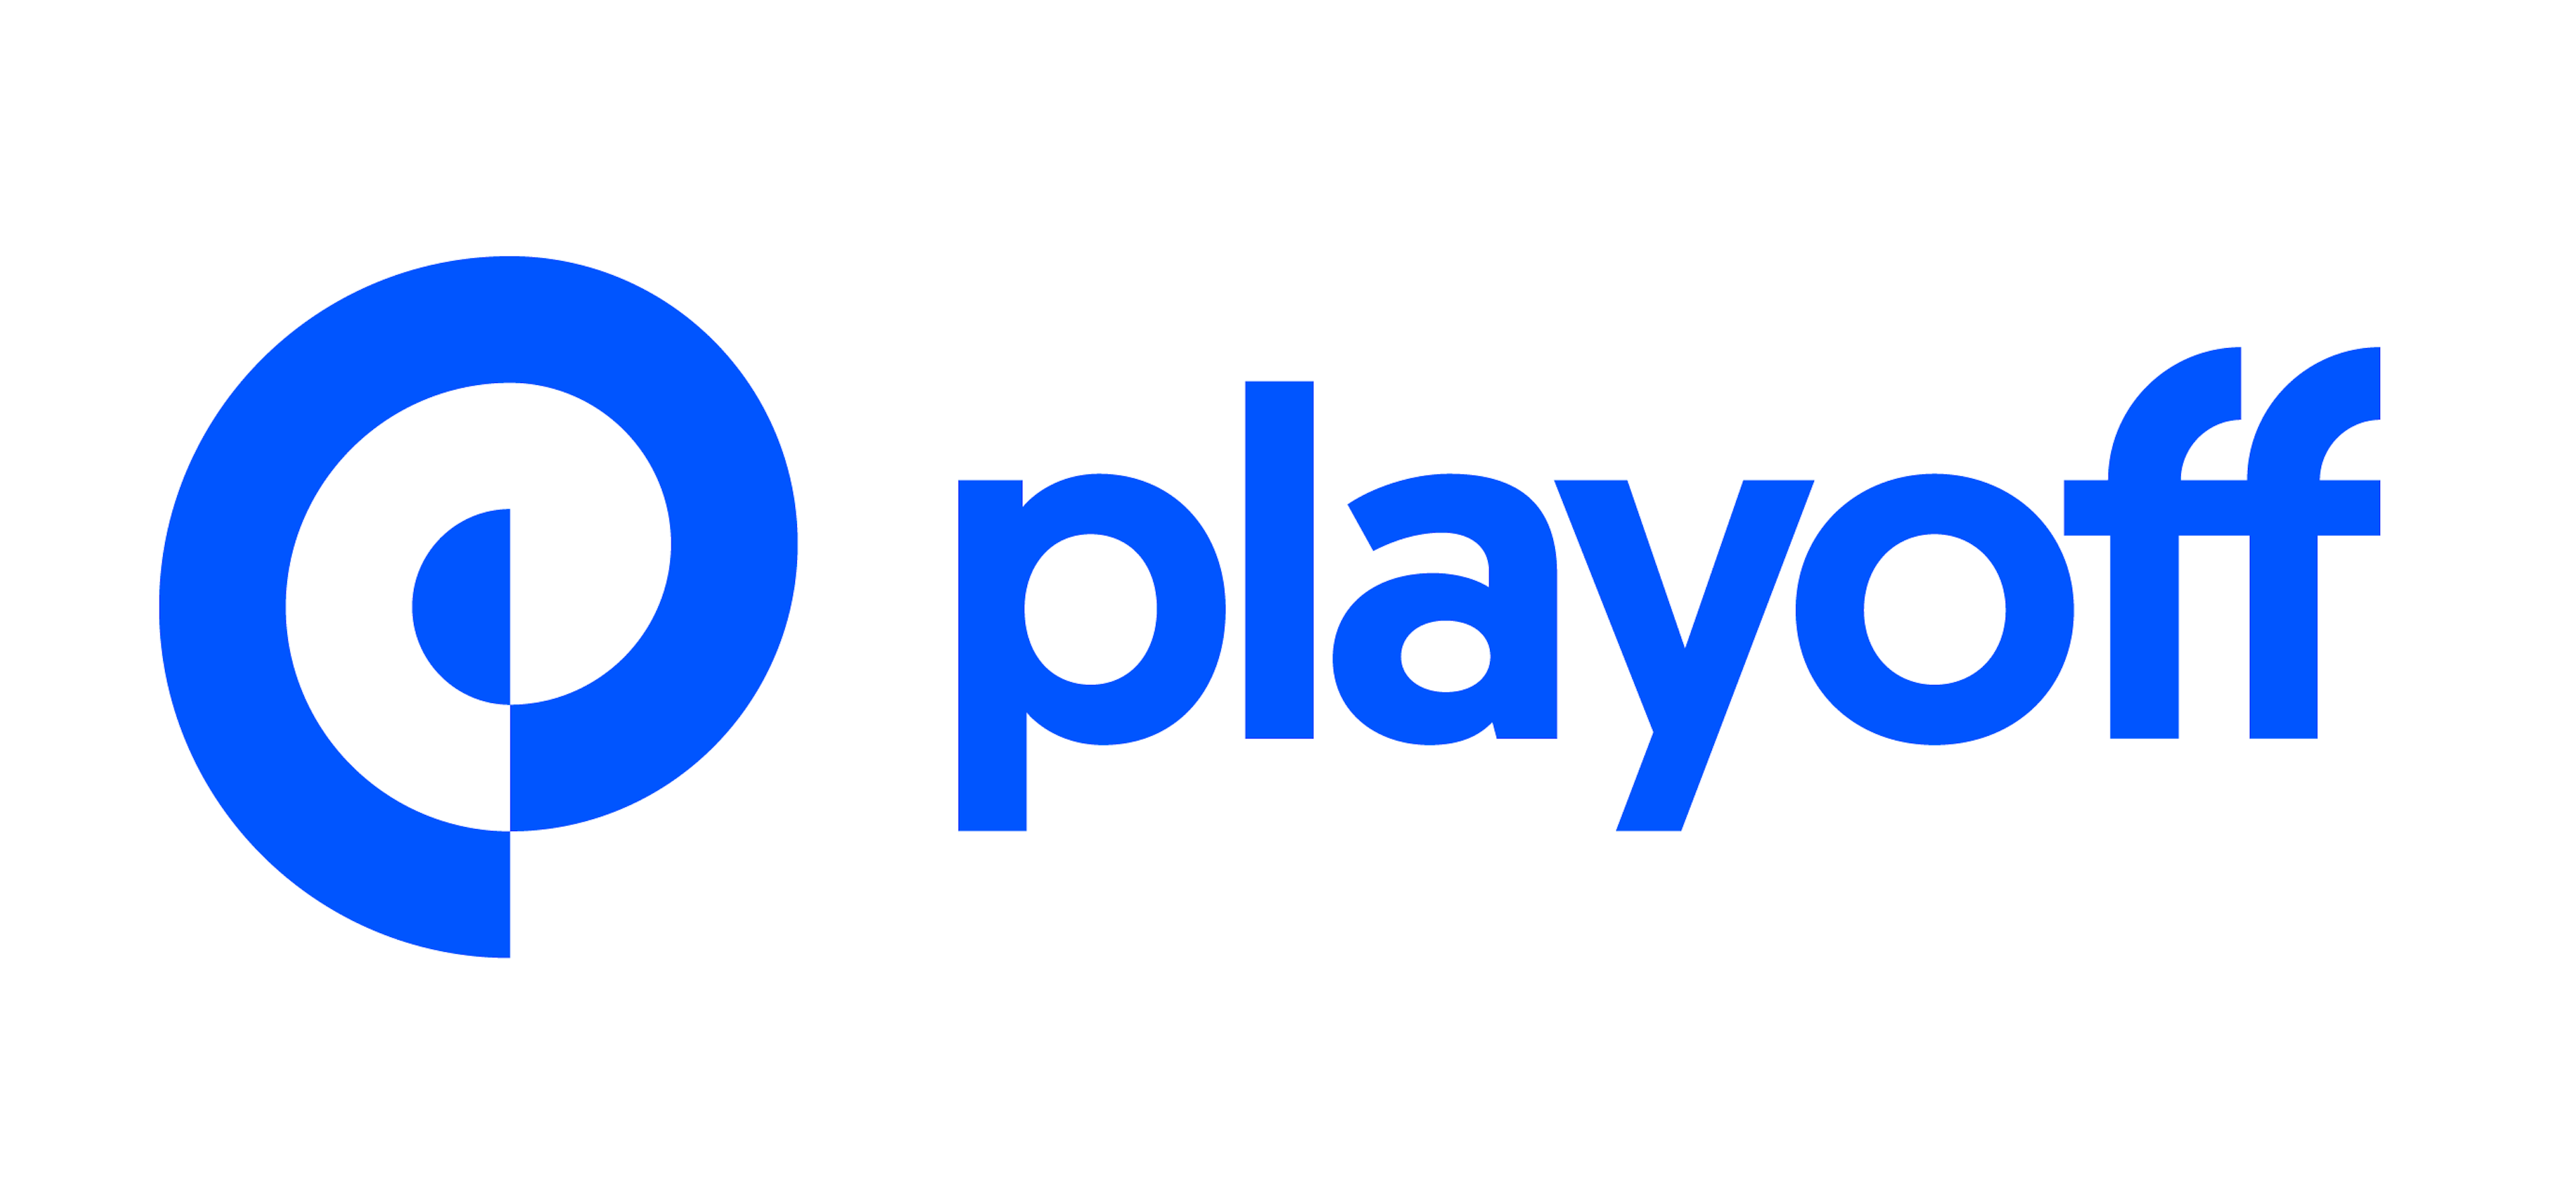 Playoff Logo